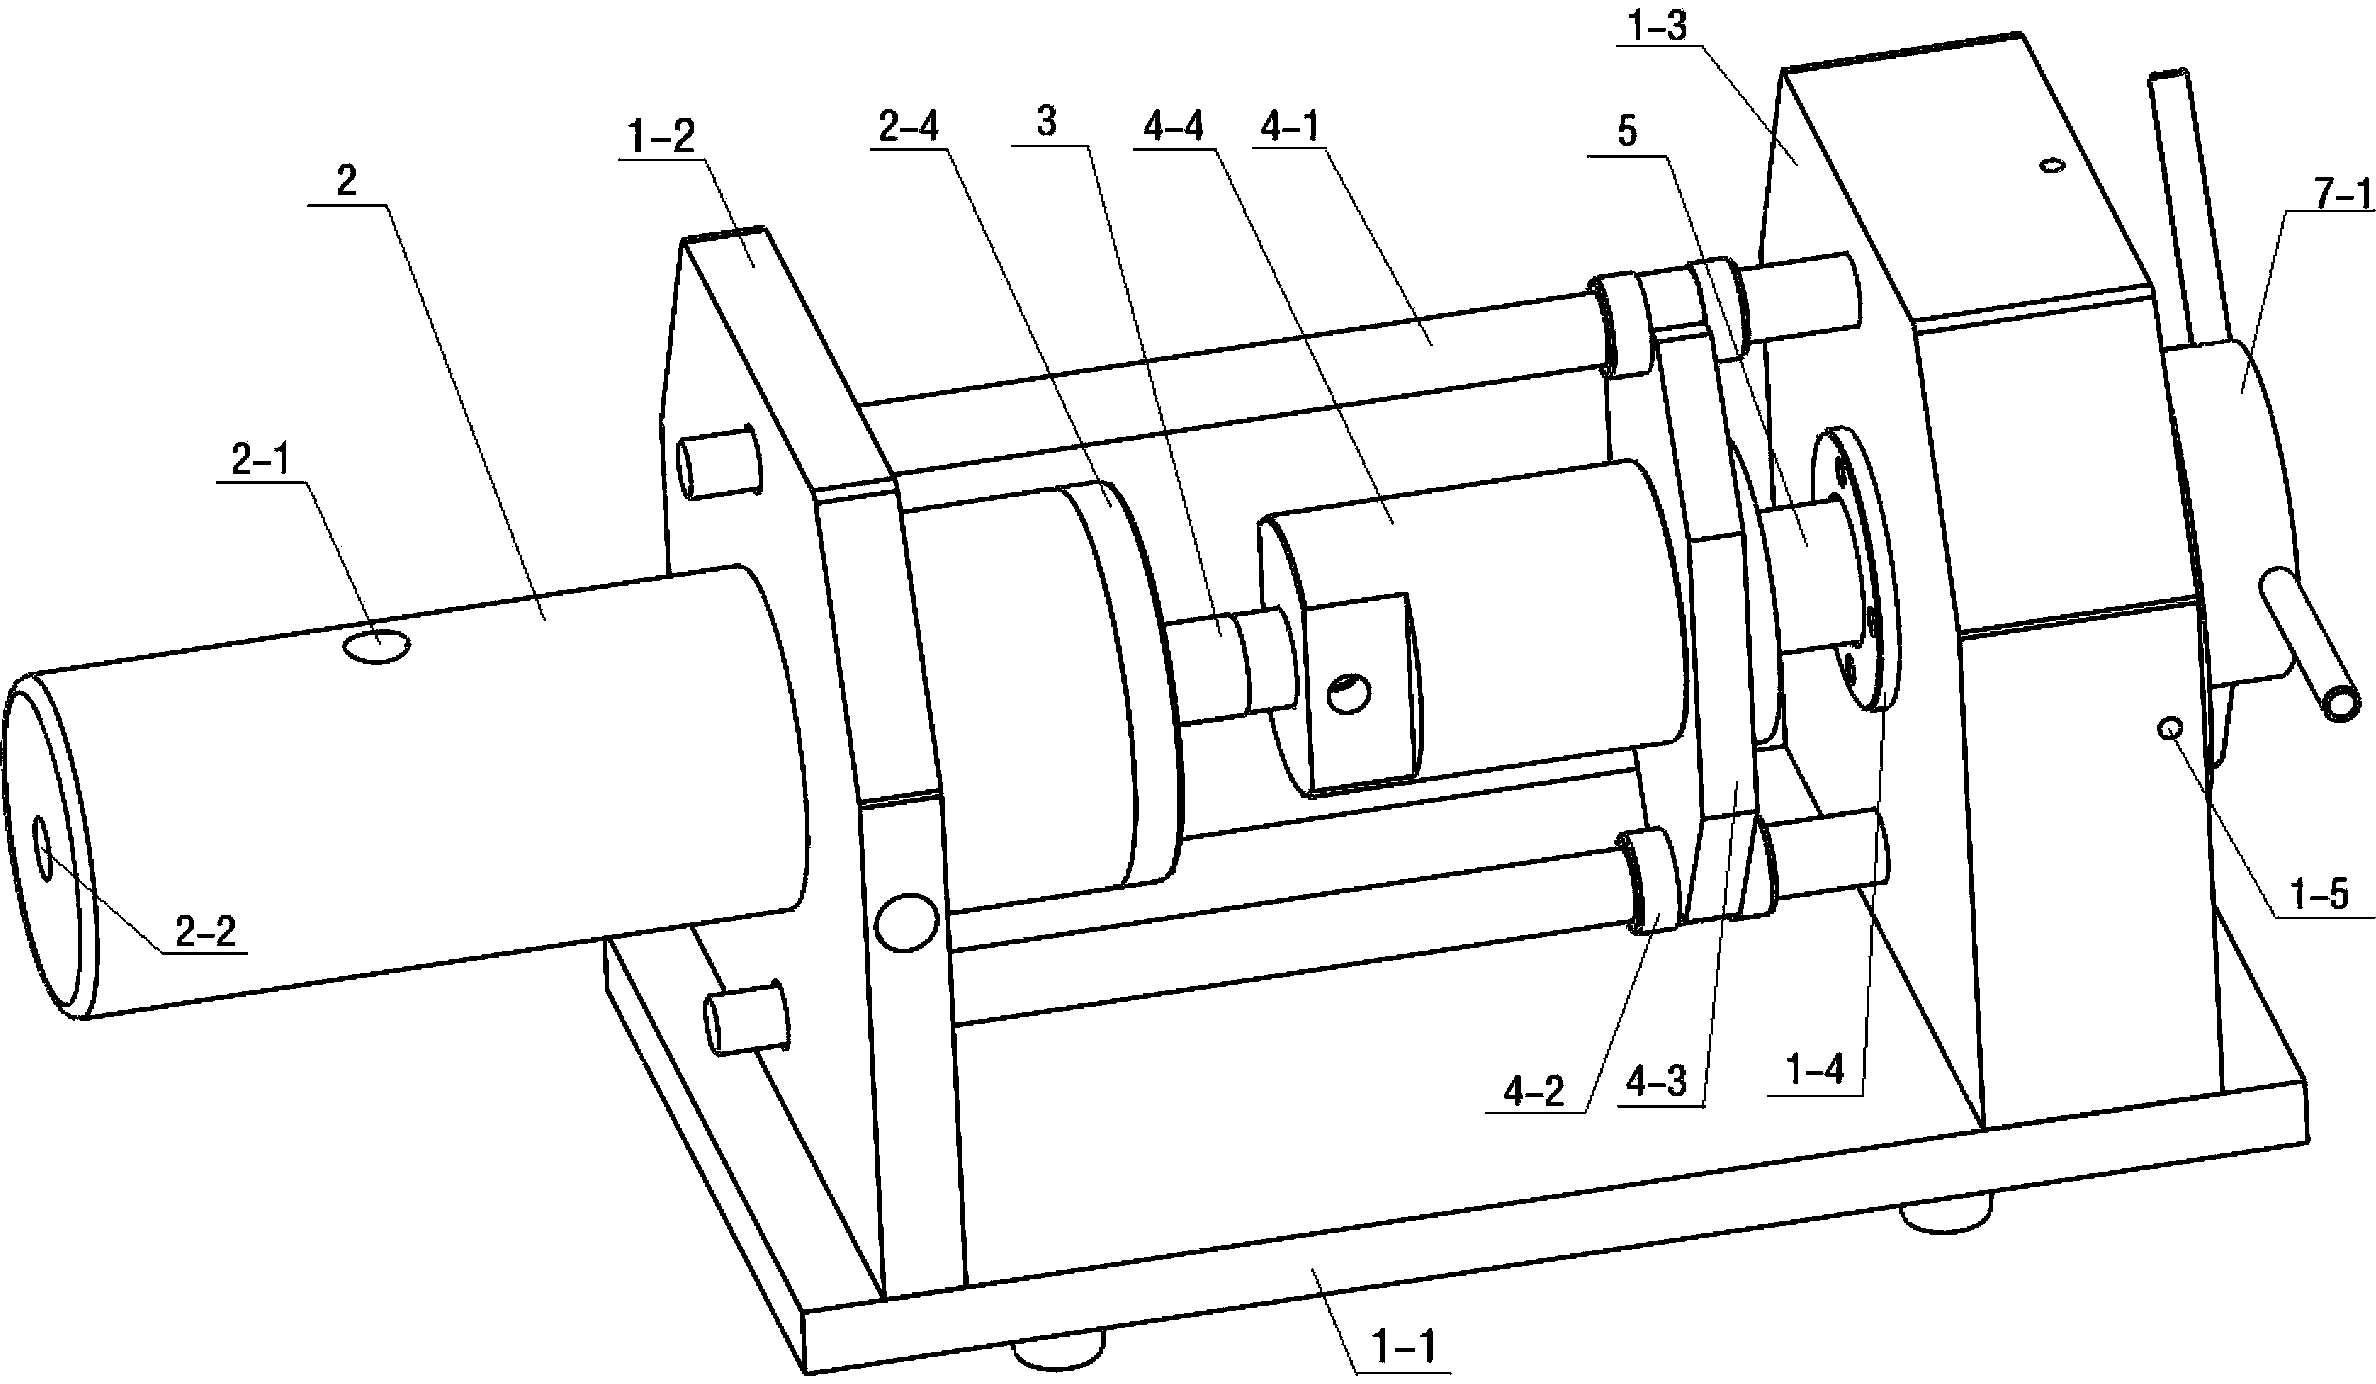 Manual and precision plunger pressuring pump